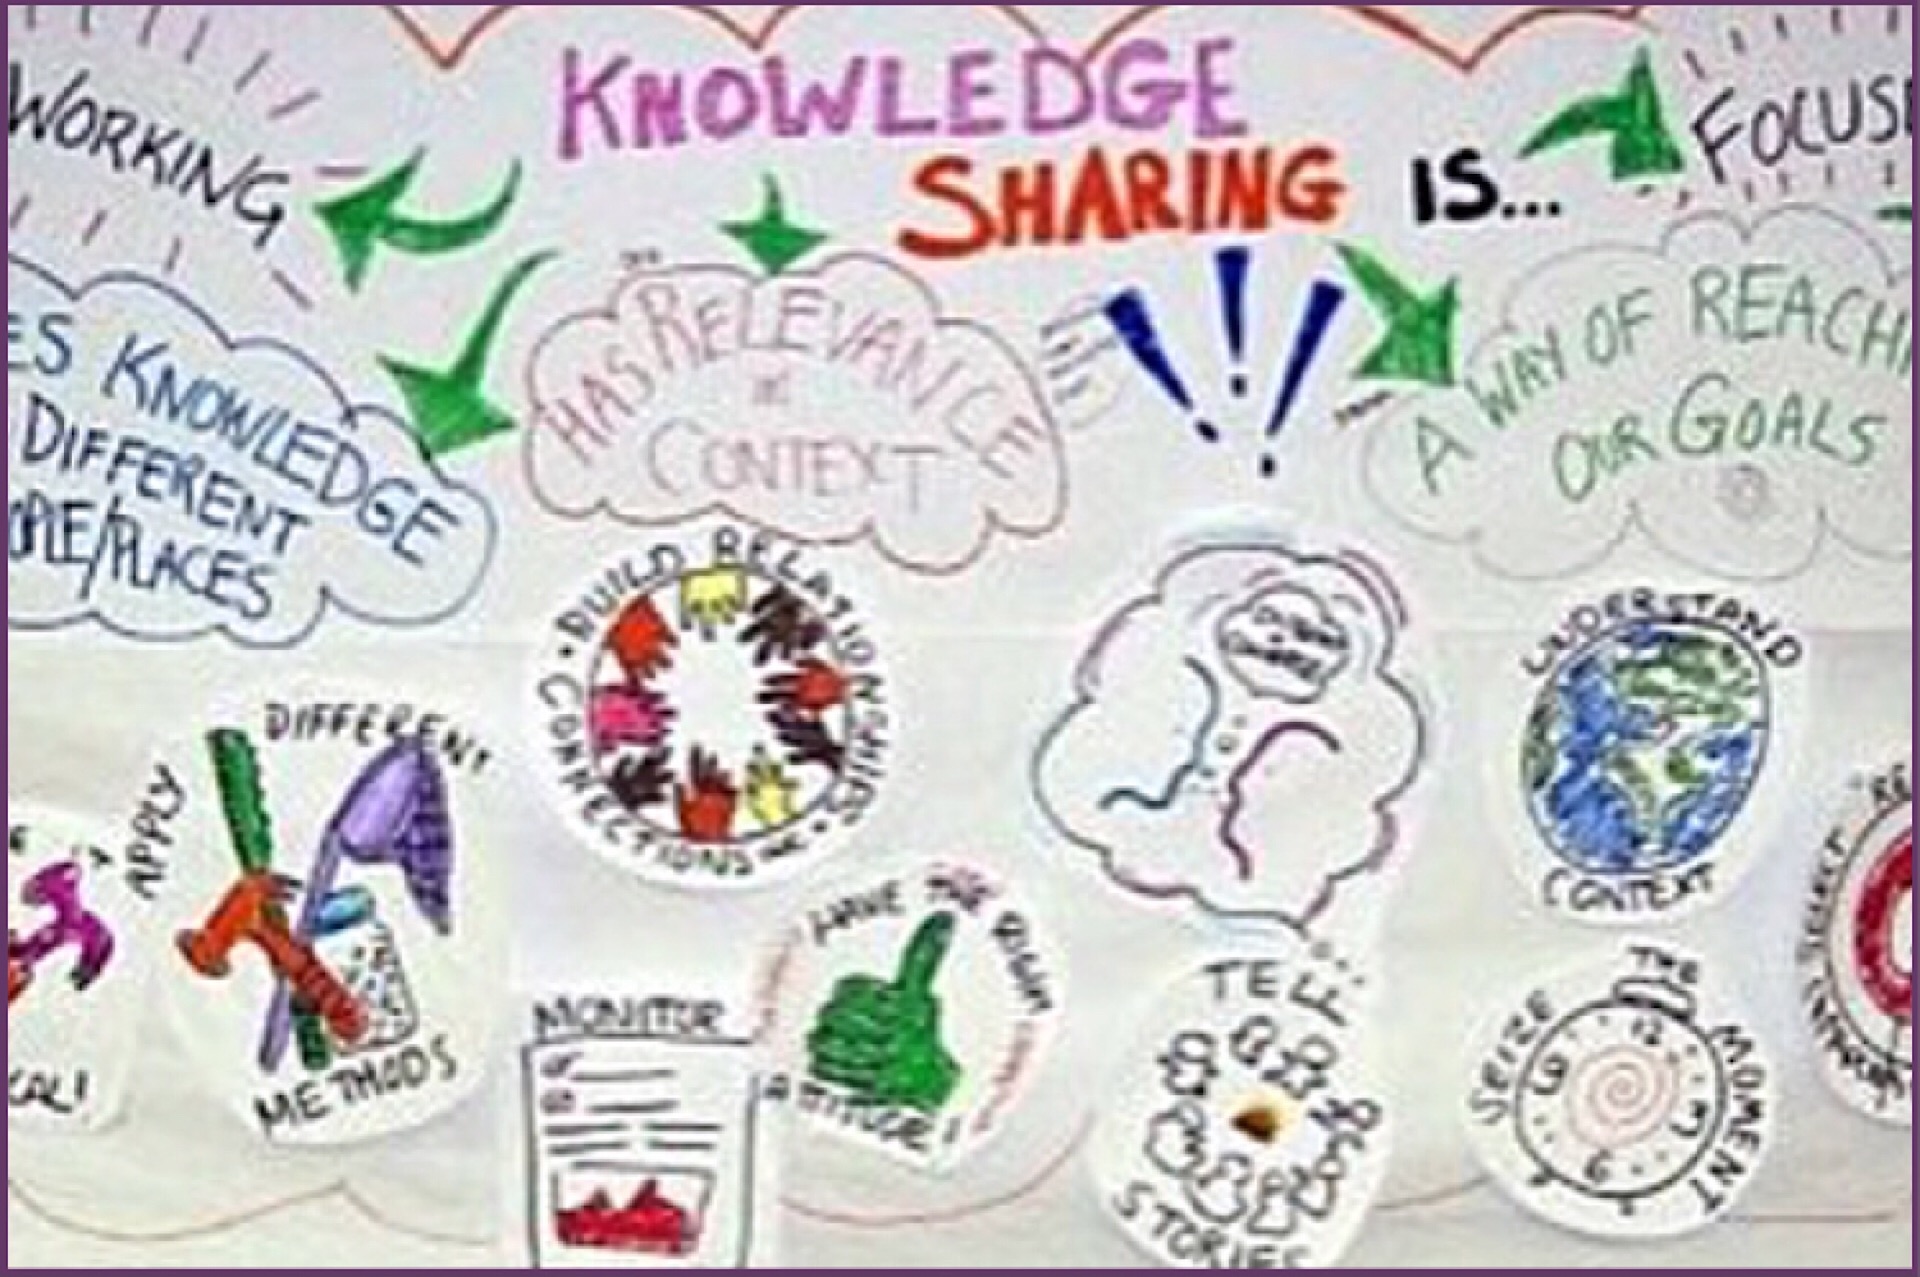 Knowledge Sharing